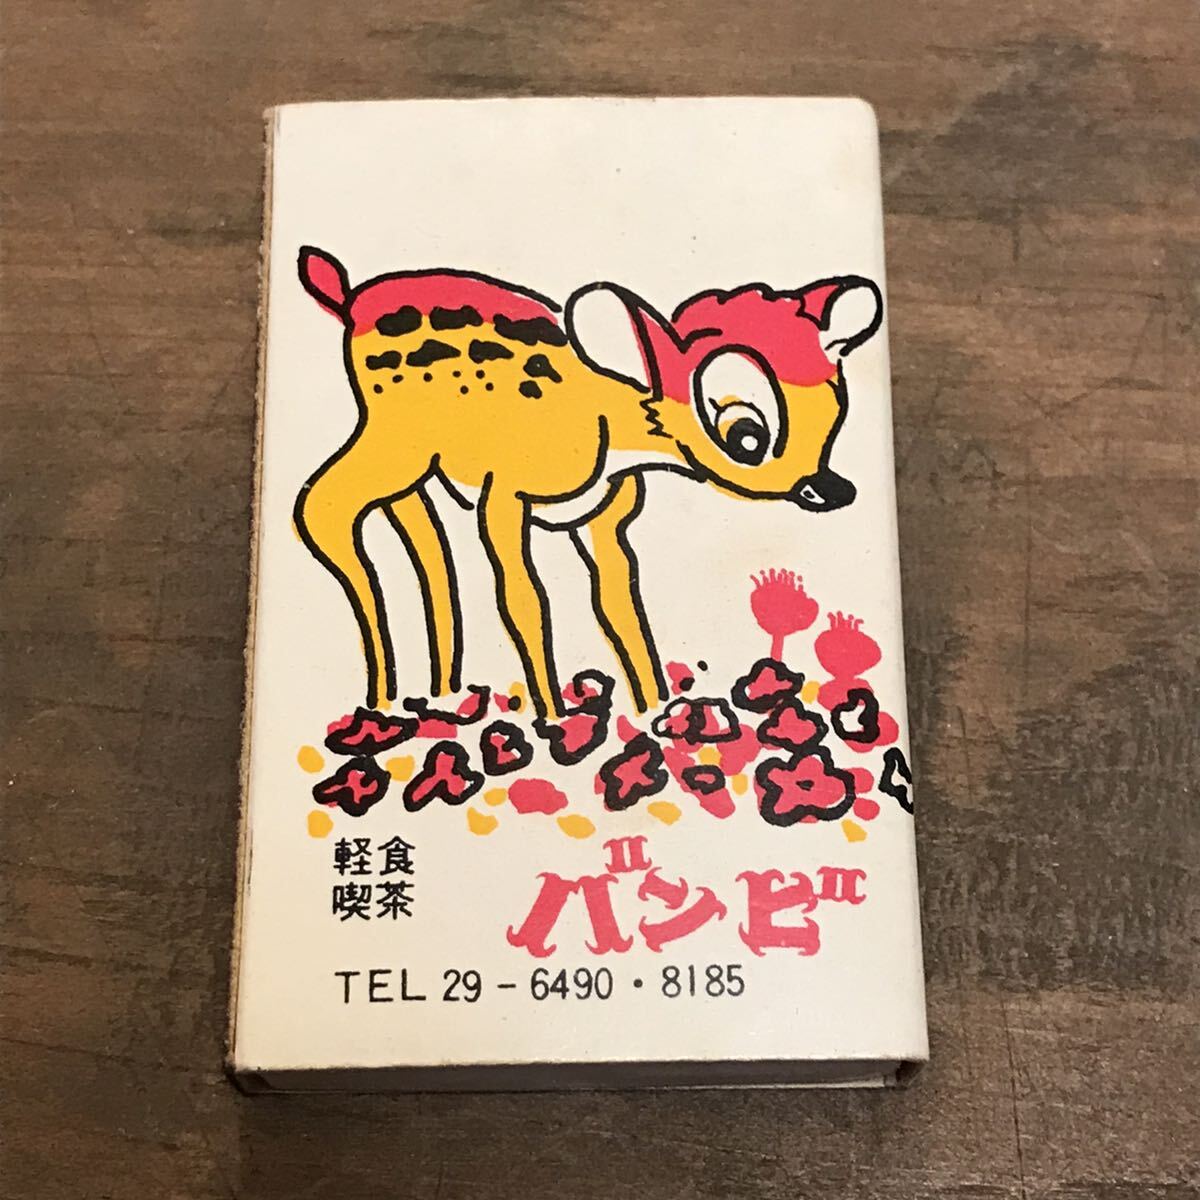  long-term keeping goods at that time matchbox light meal . tea Bambi middle . Hakata Fukuoka search . present ground local retro Showa era .. restaurant snack kyabare-pab